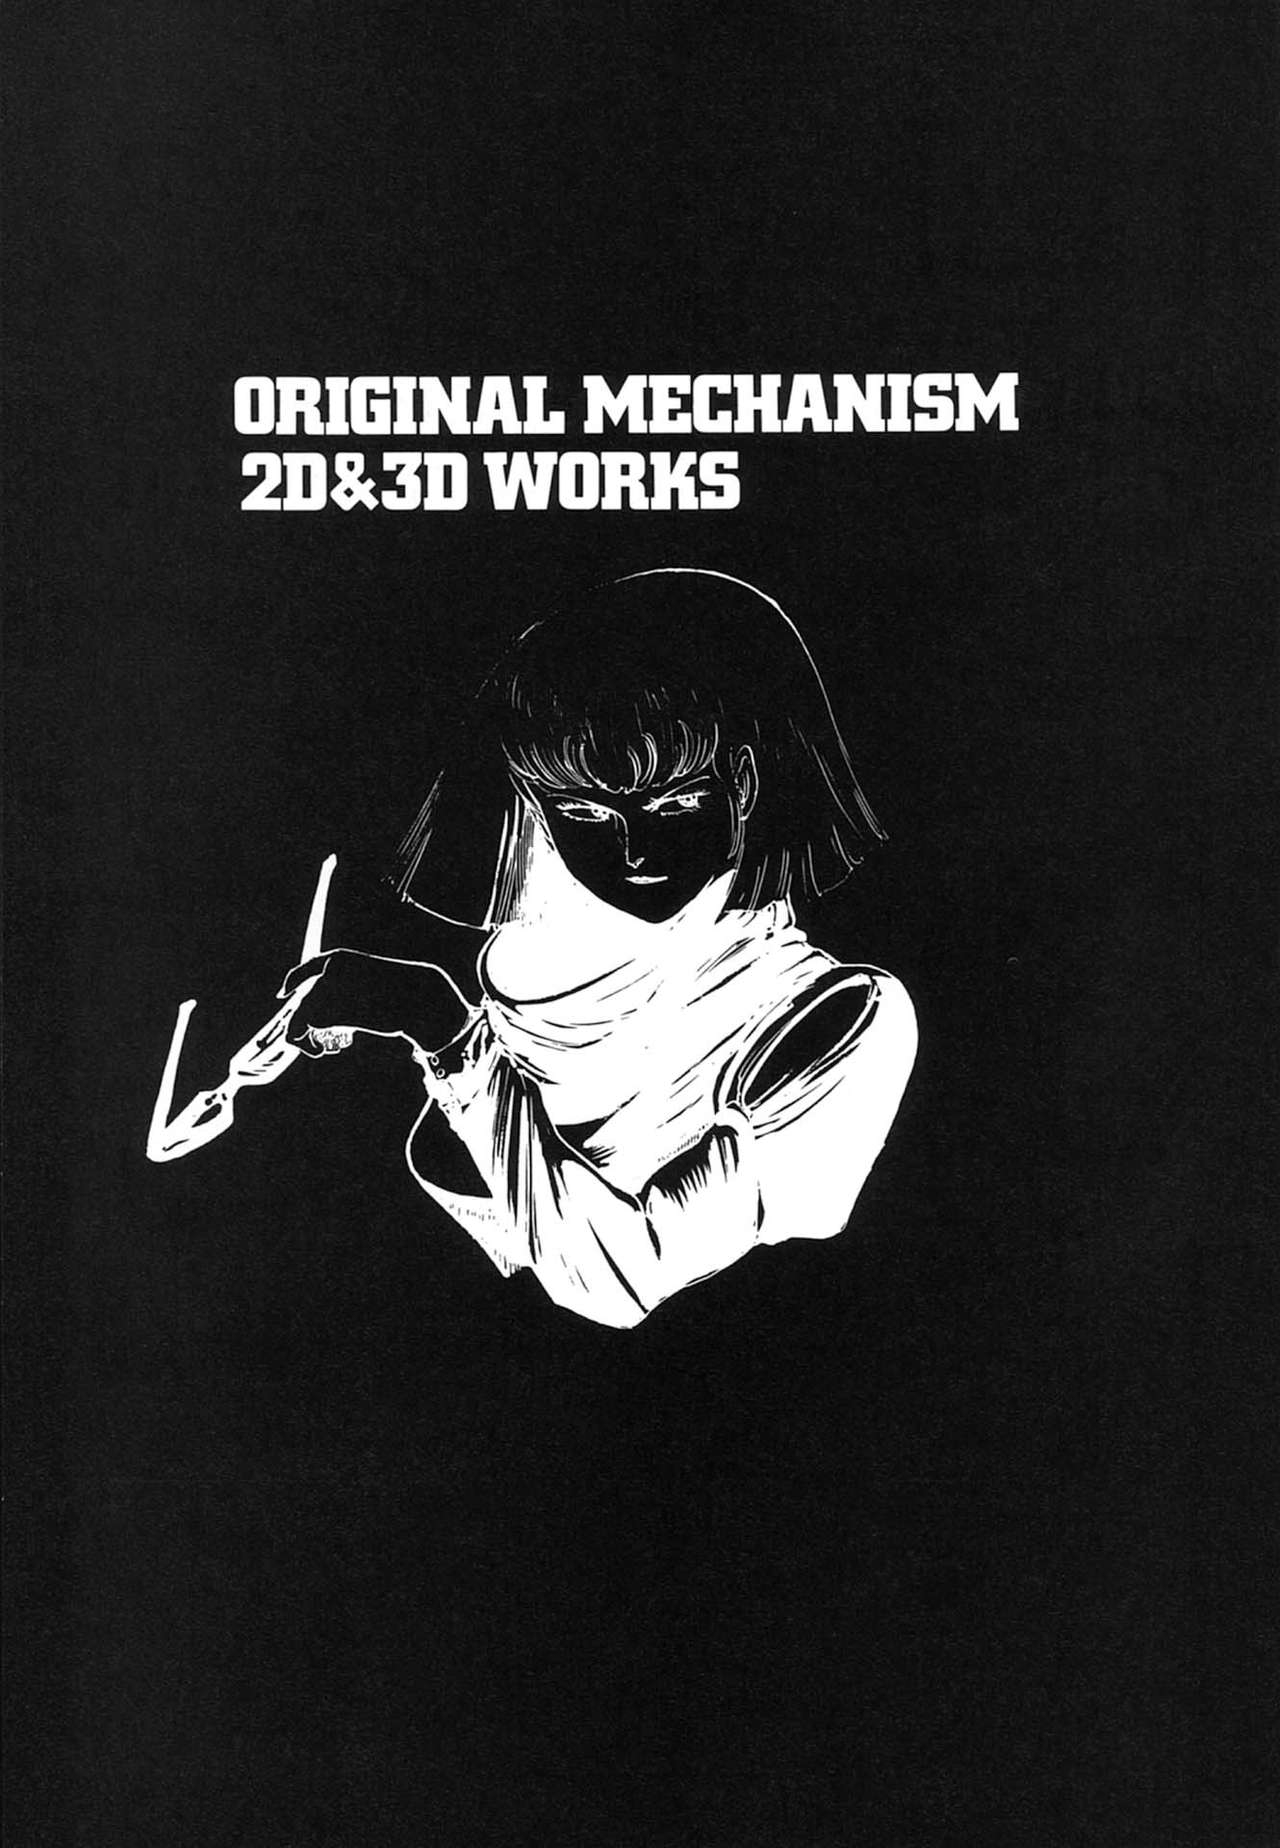 [Kazuhisa Kondo] Kazuhisa Kondo 2D & 3D Works - Go Ahead - From Mobile Suit Gundam to Original Mechanism 102